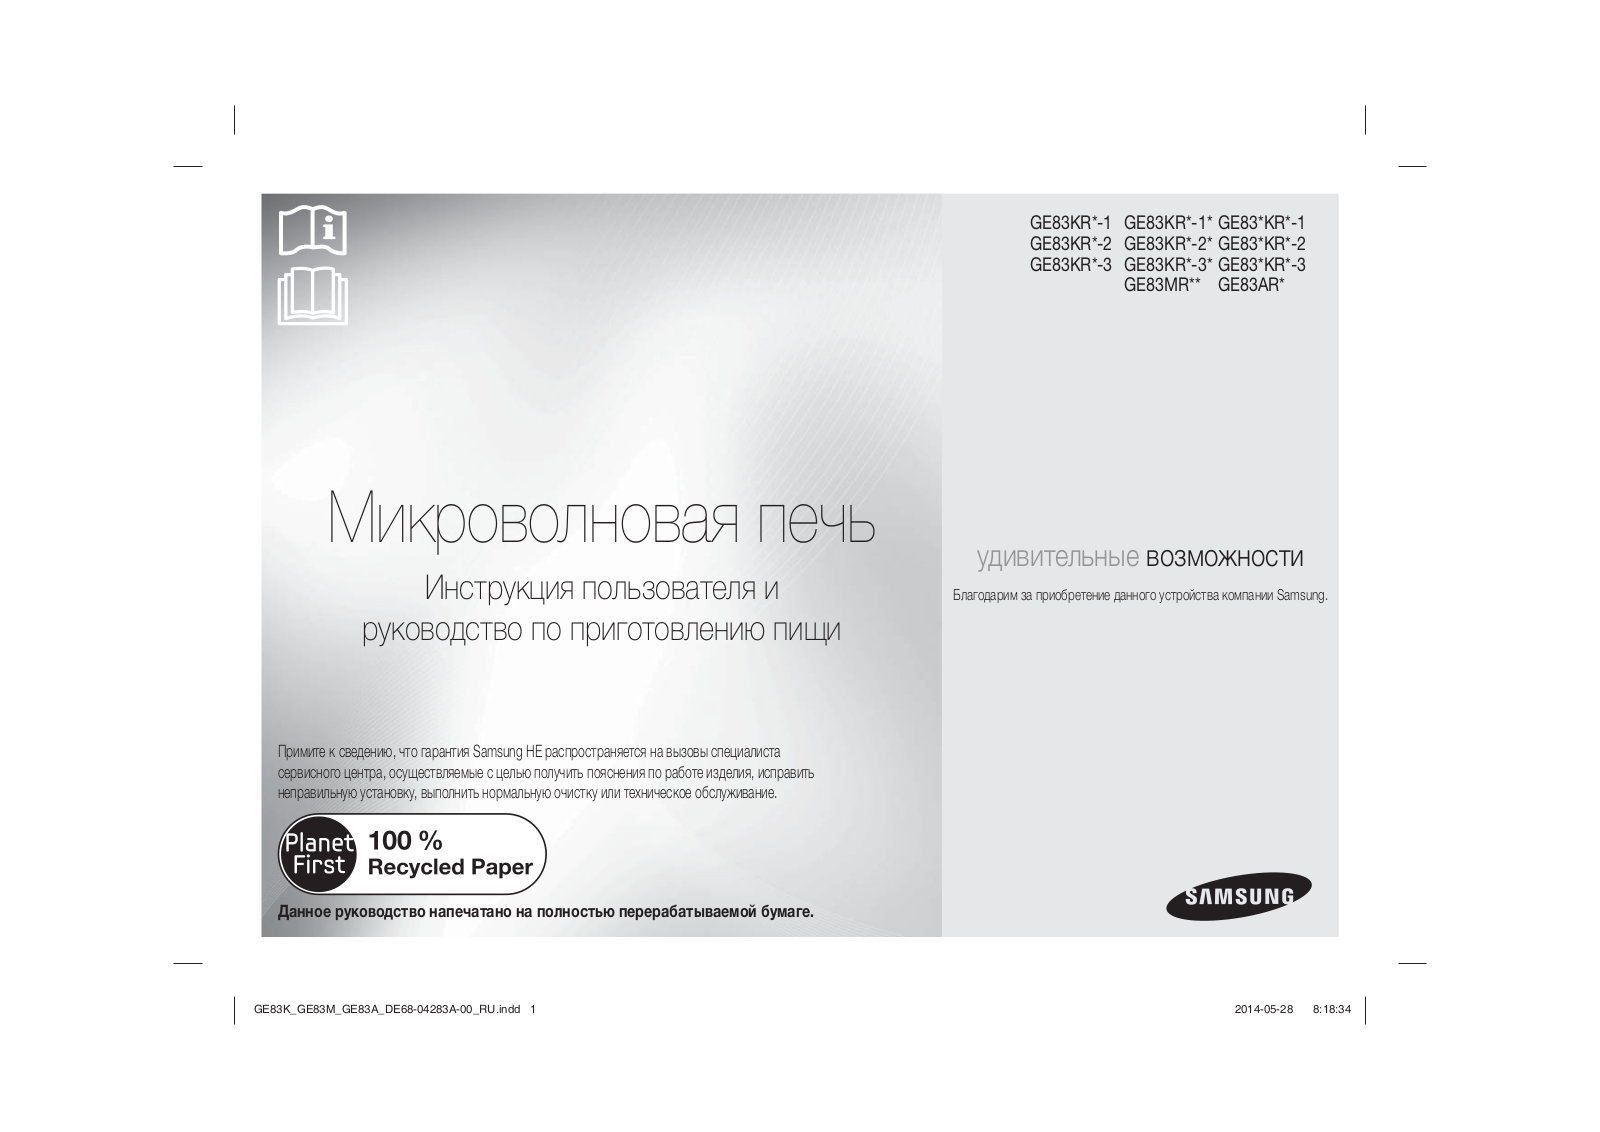 Samsung GE83KRW-2 User Manual